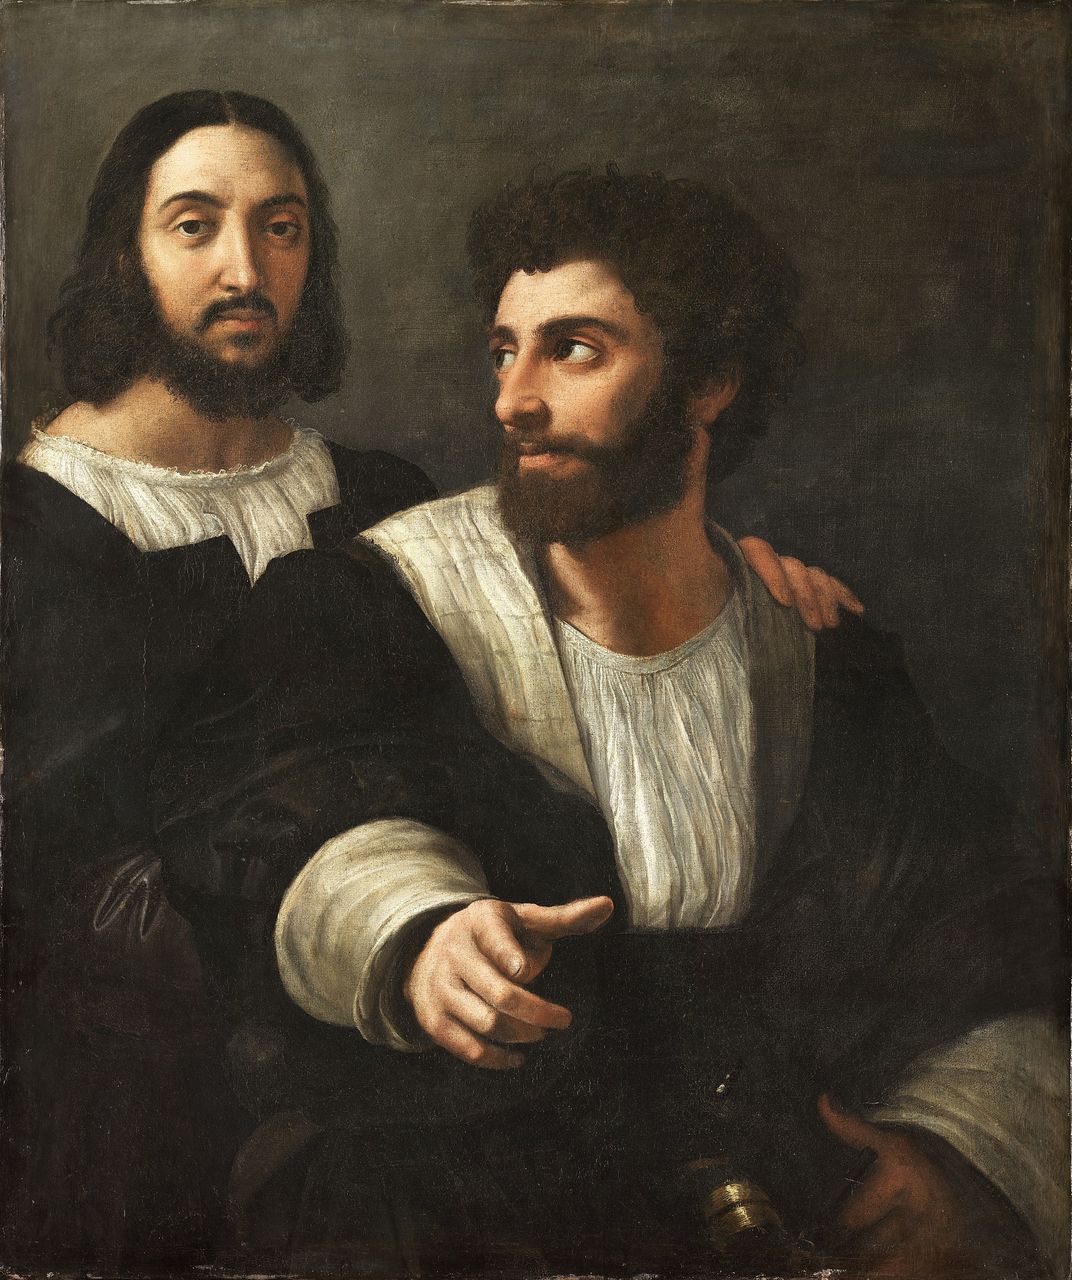 Raphael self-portrait with friend